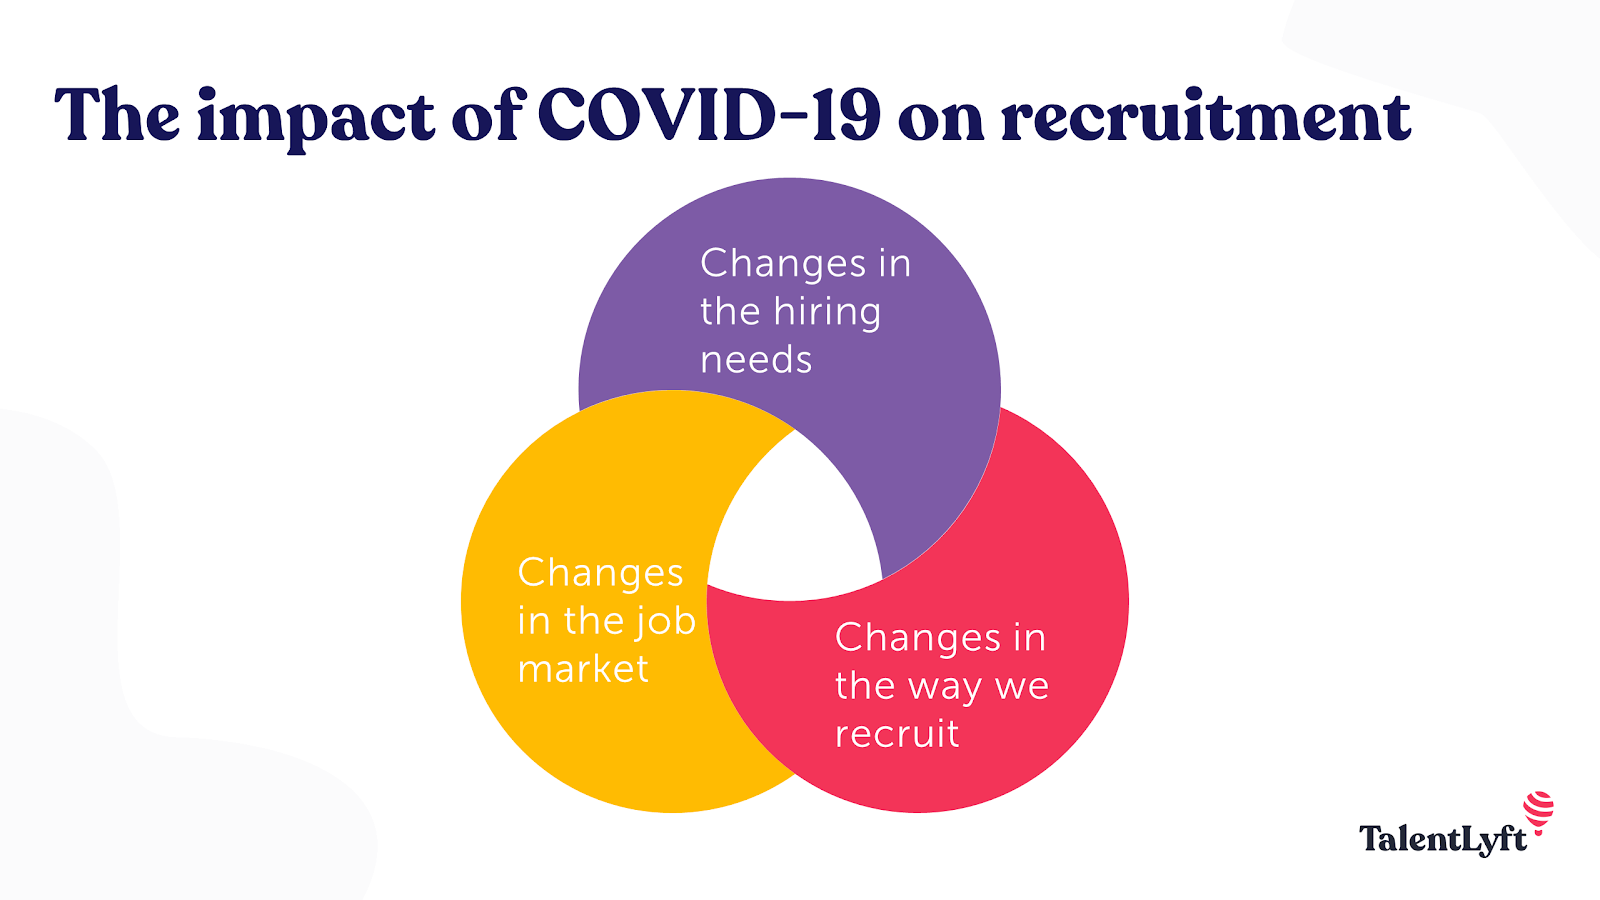 How did COVID-19 change recruitment